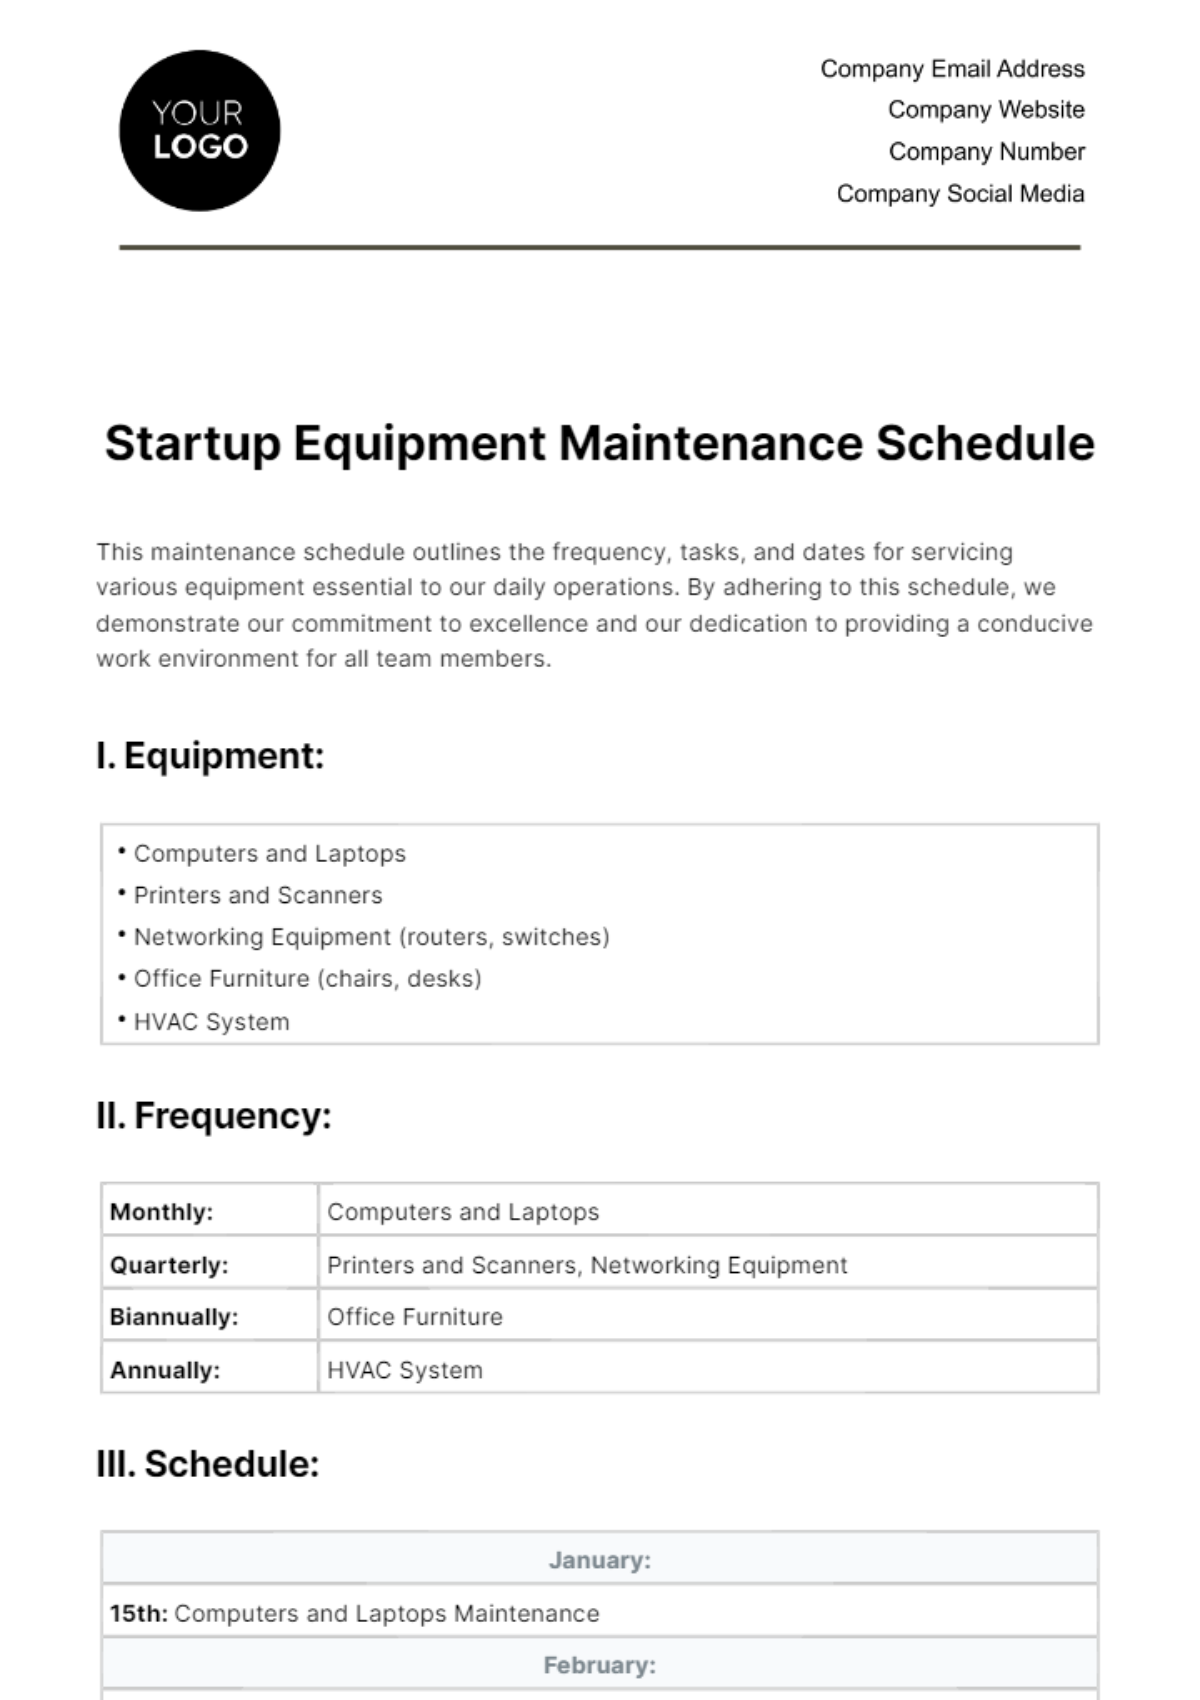 Startup Equipment Maintenance Schedule Template